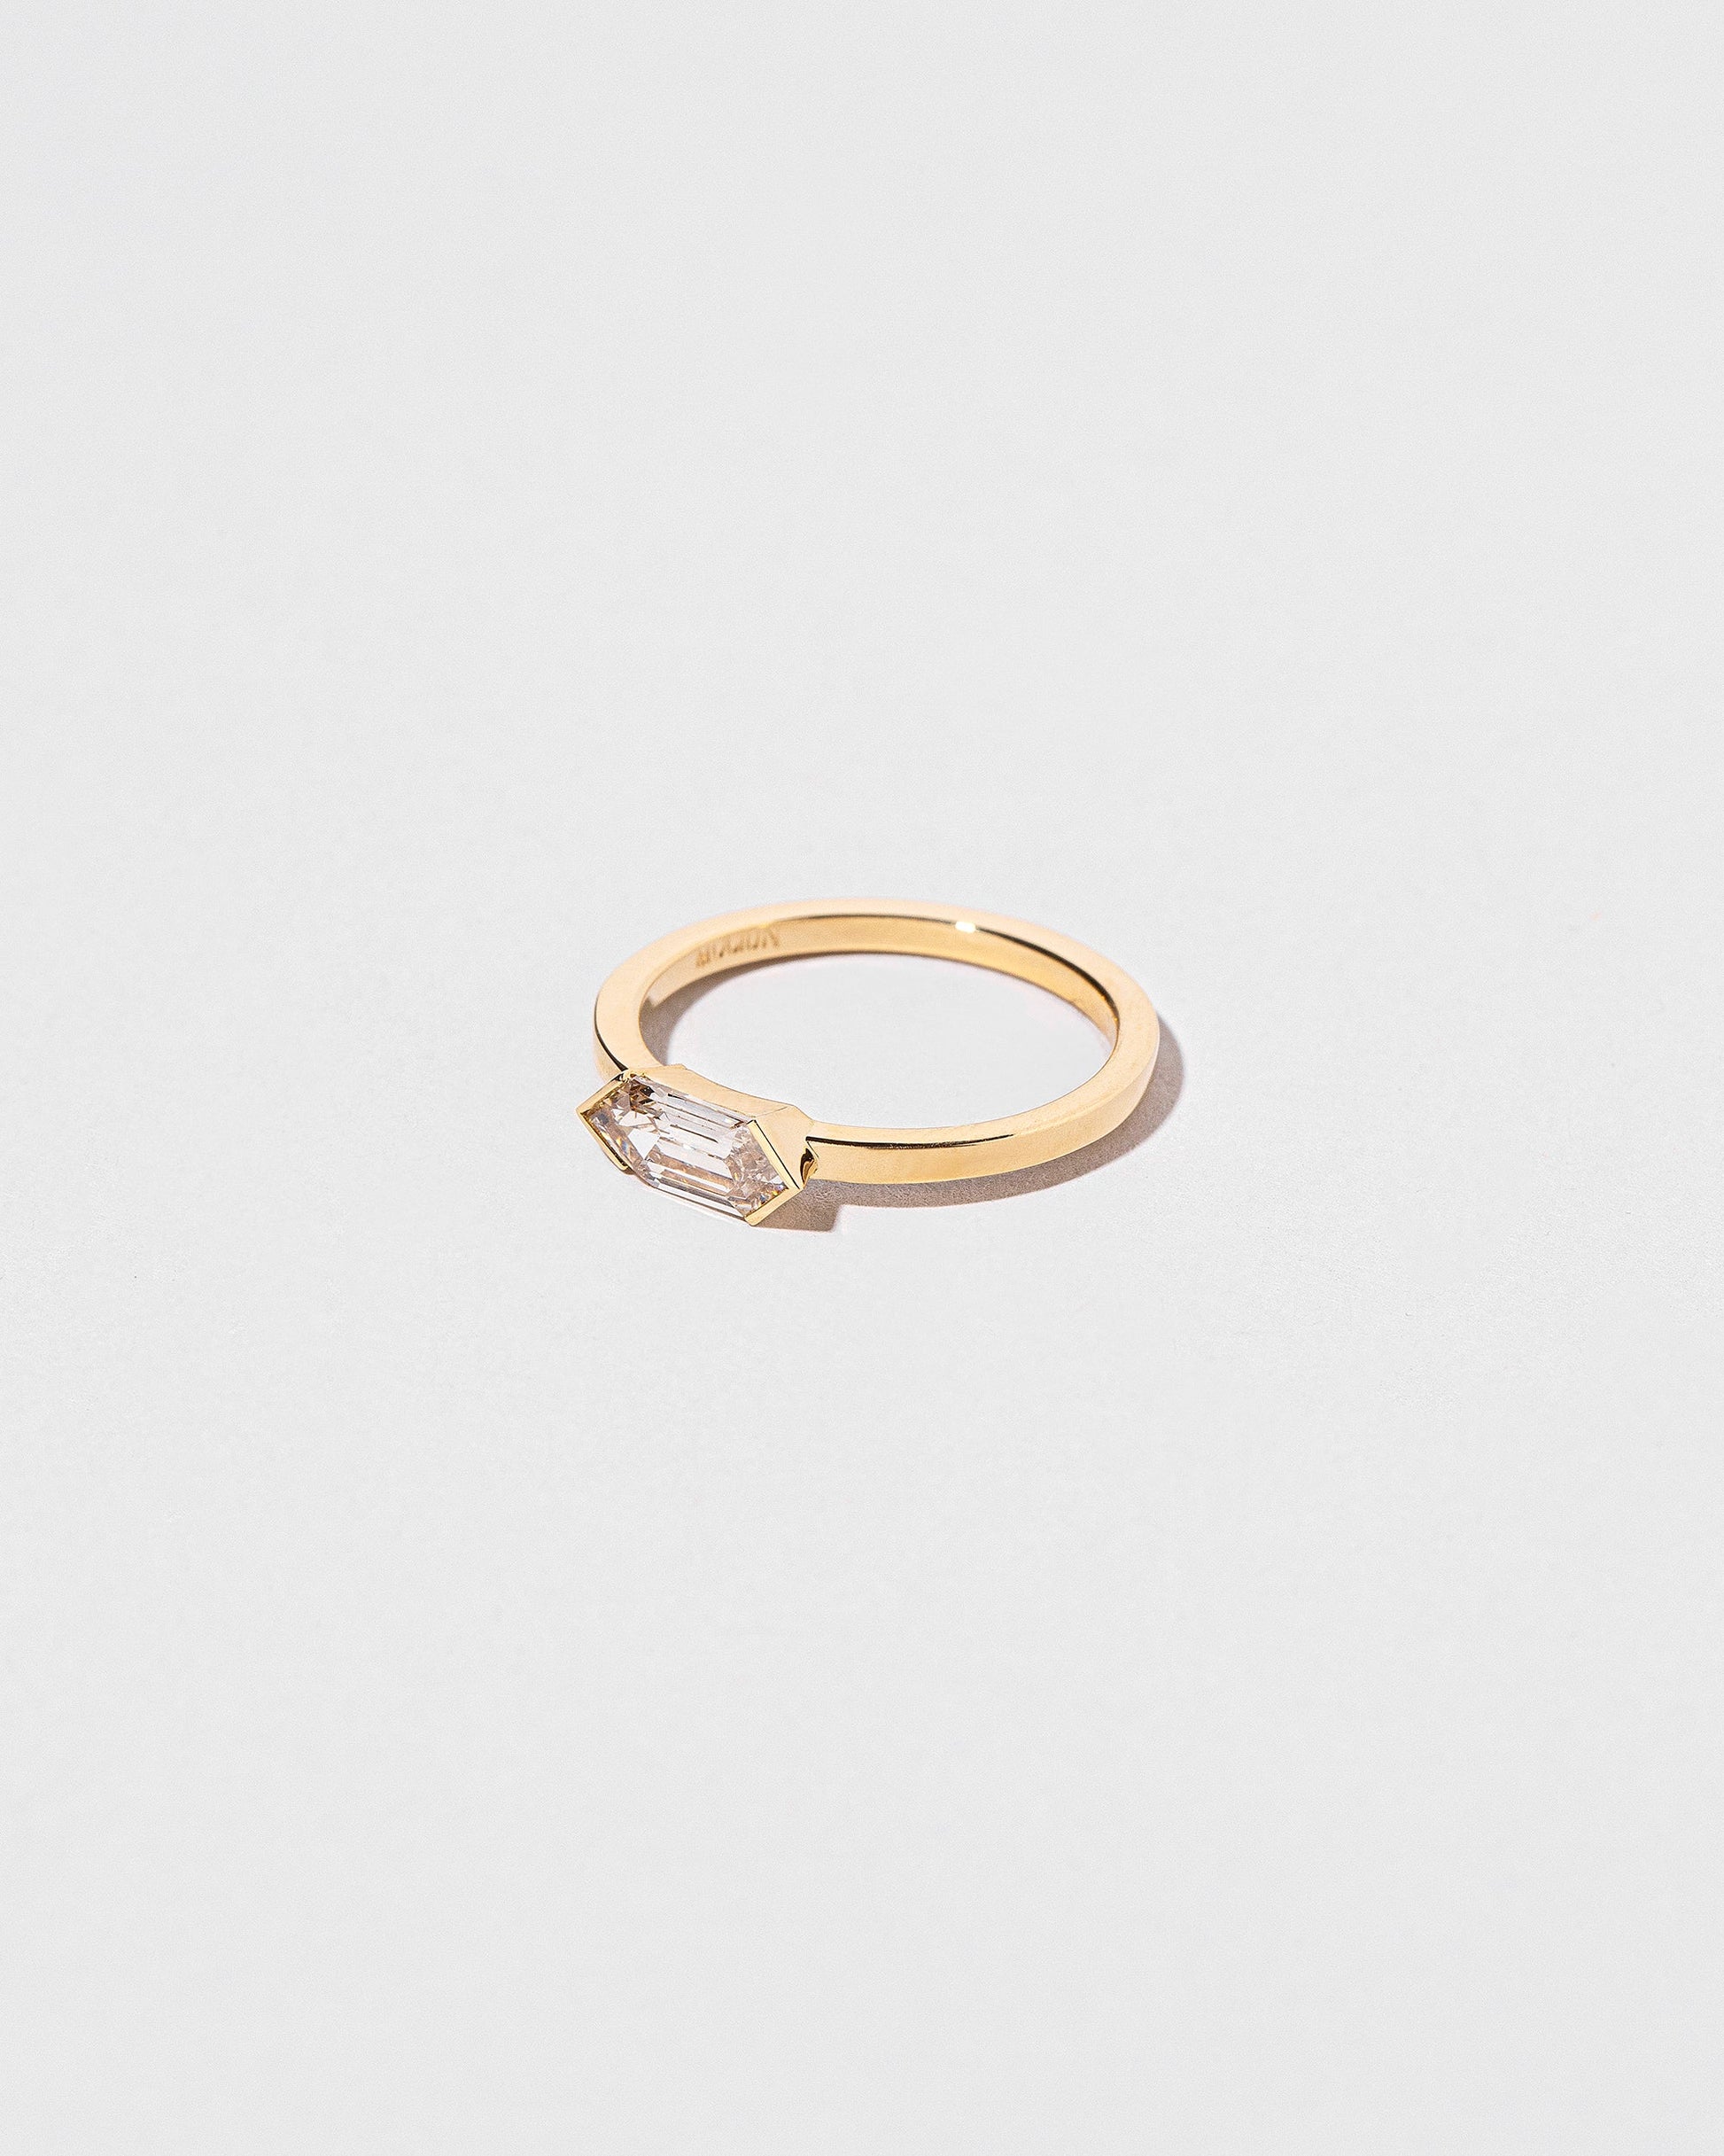  Ergodic Ring on light color background.